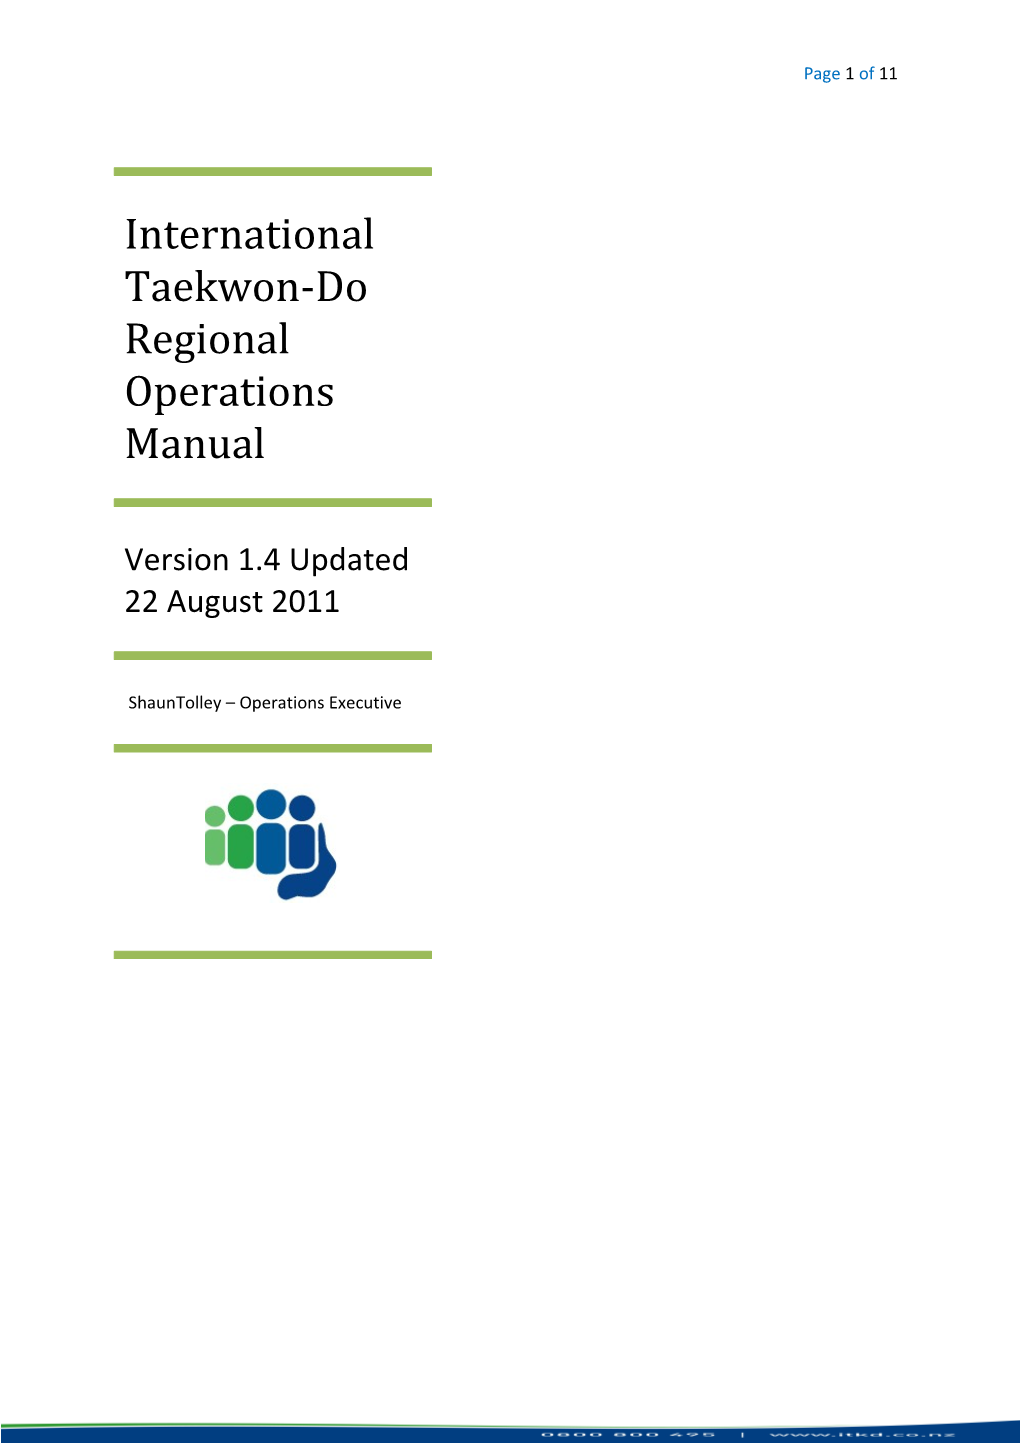 International Taekwon-Do Regional Operations Manual